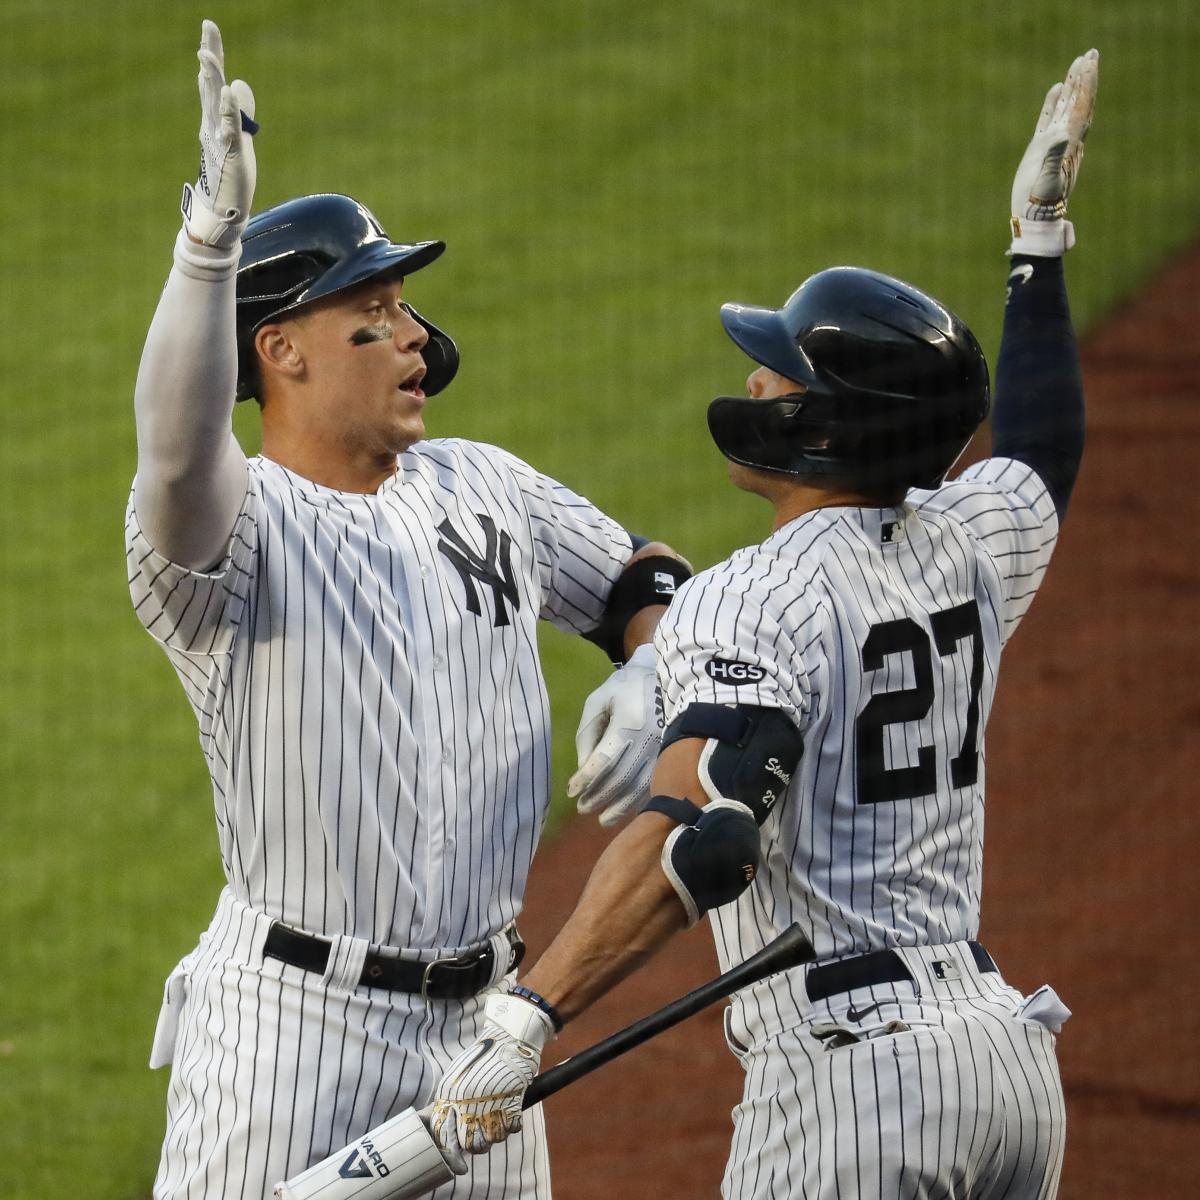 New York Yankees Value Defensive Runs Saved, As Evidenced By Isiah